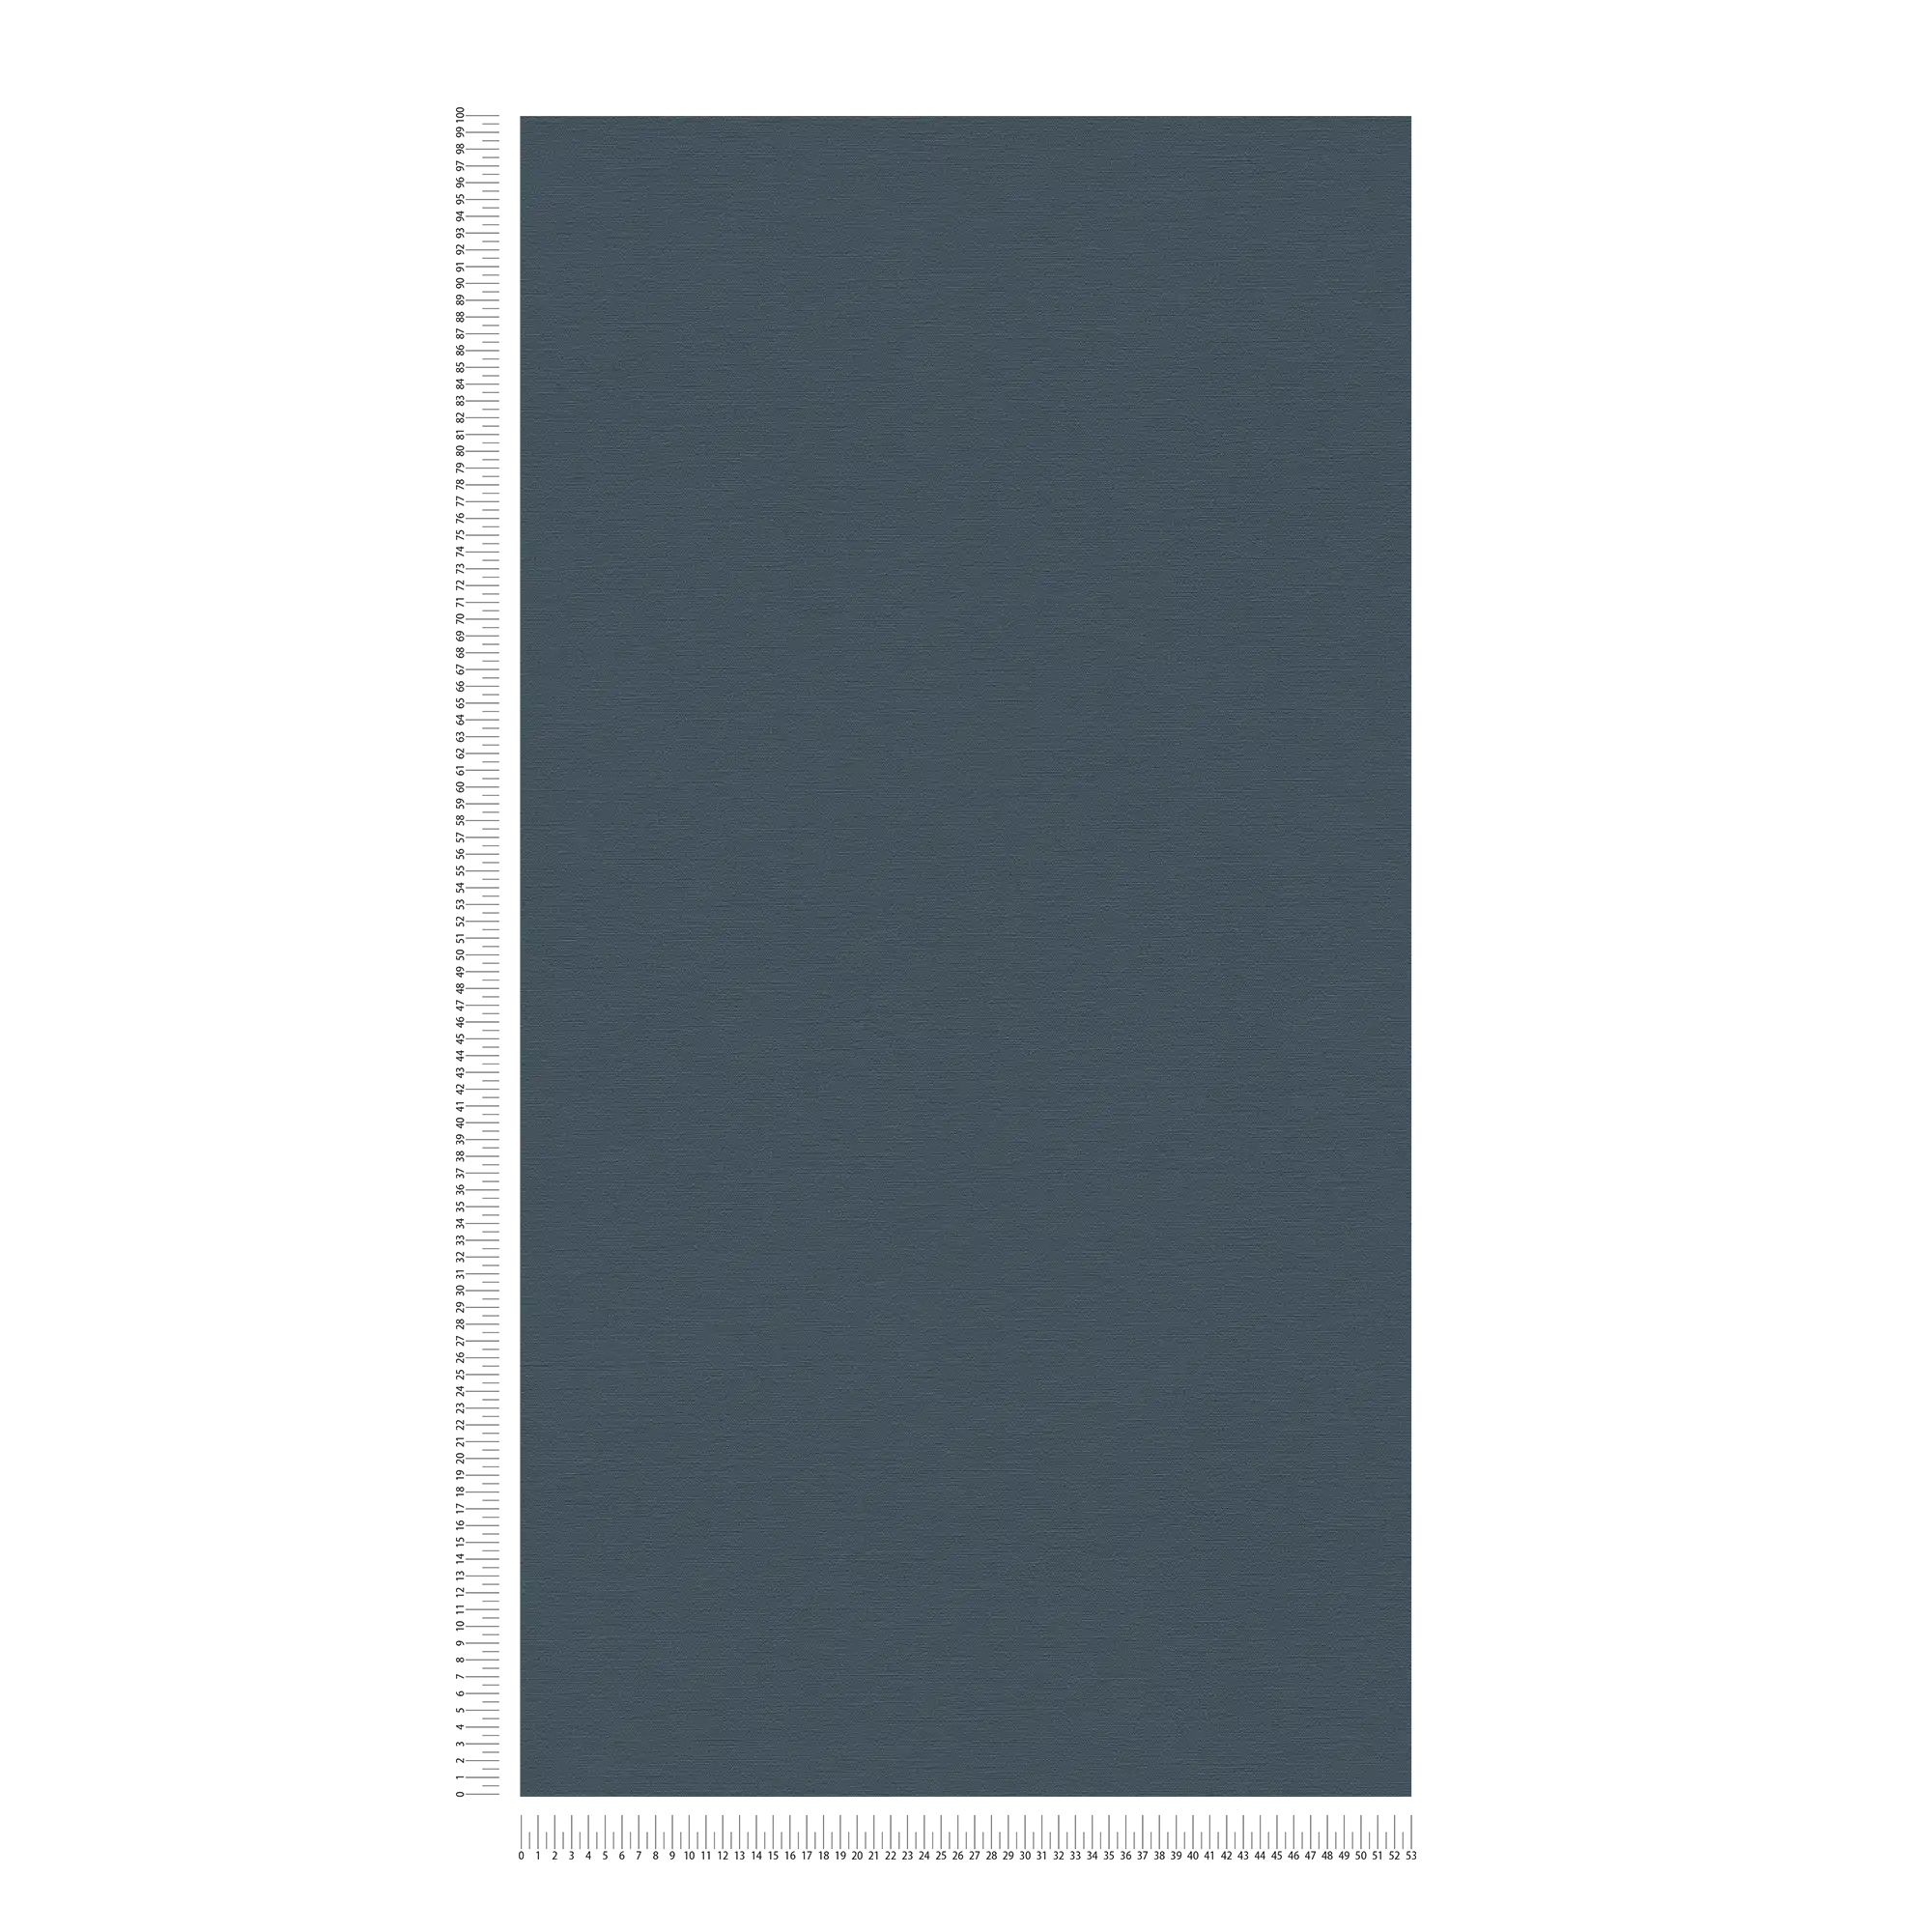             Dark plain with light structure - Blue
        